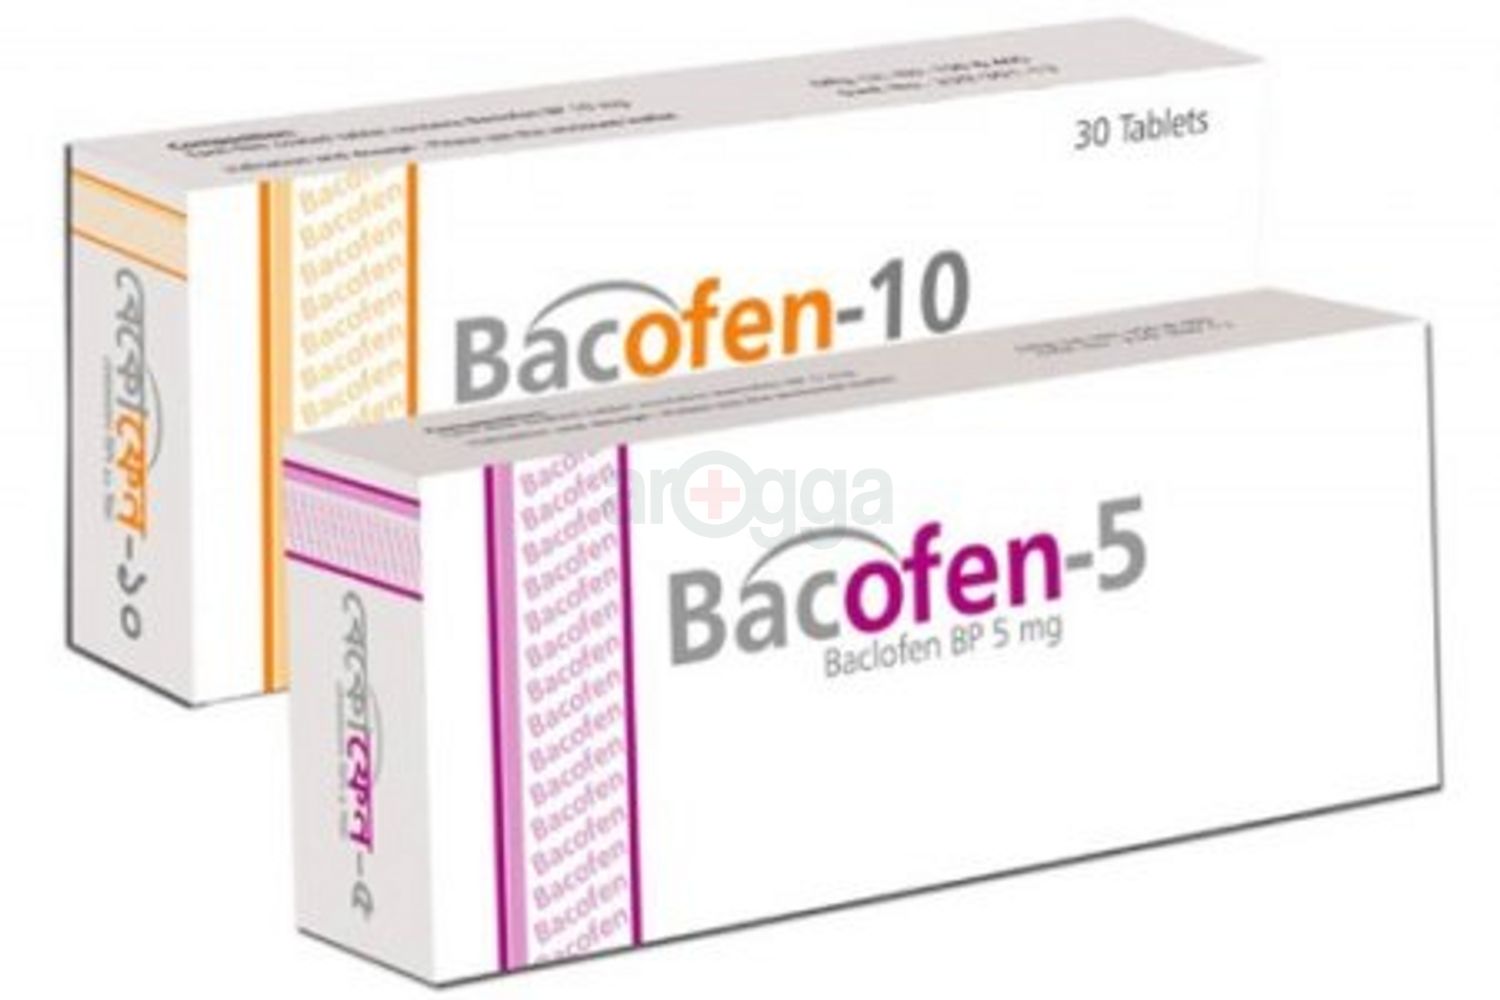 Bacofen 10